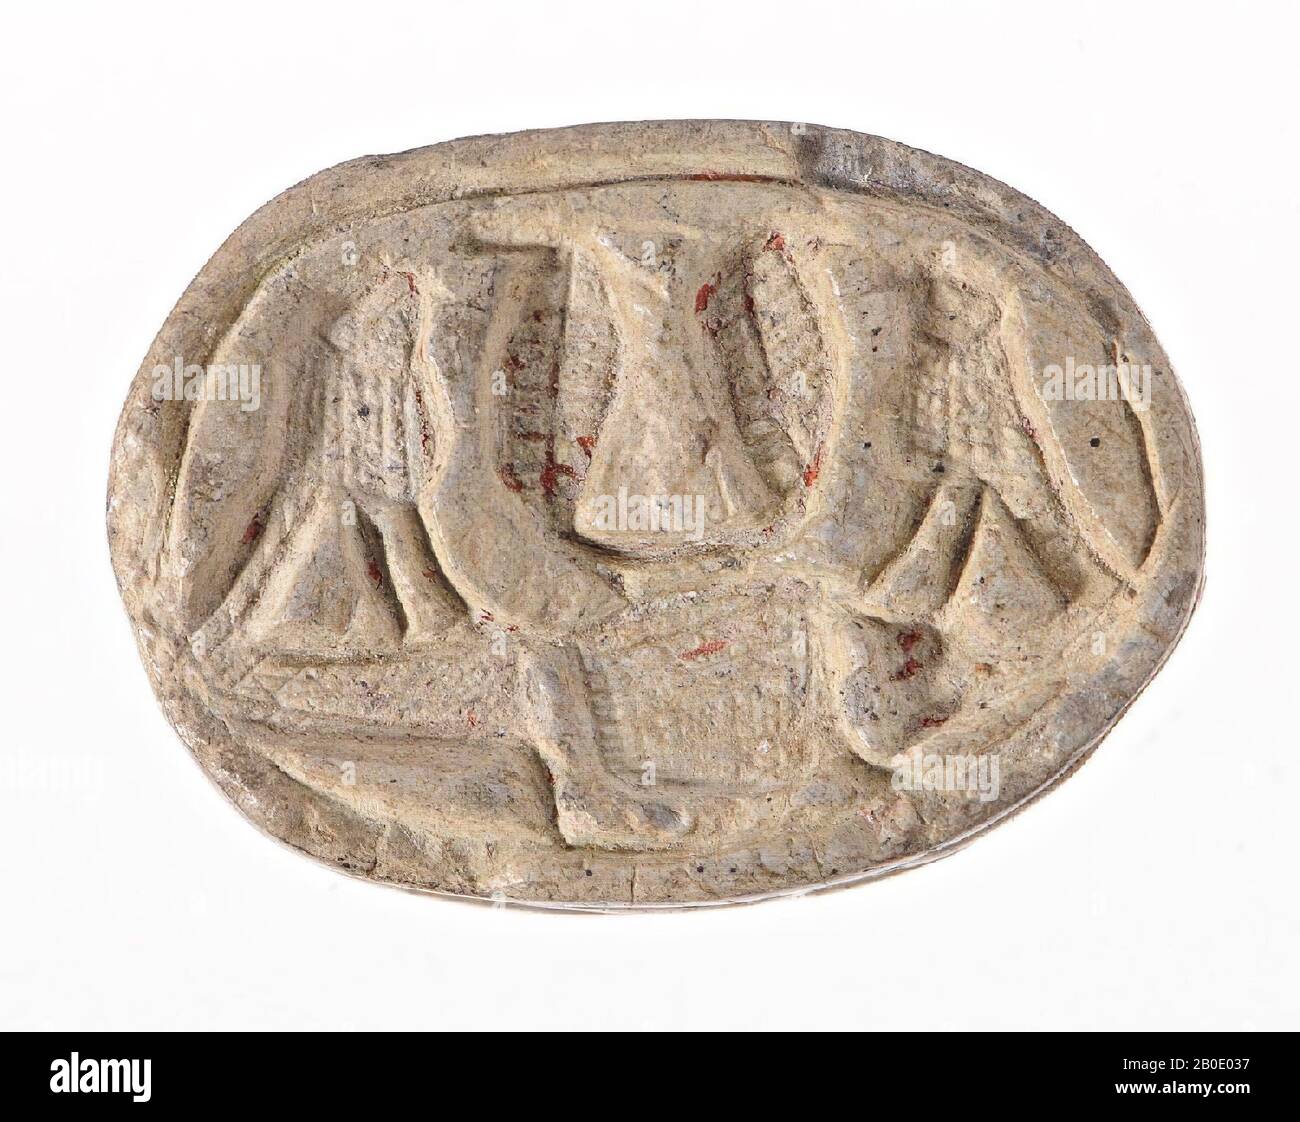 Egypt, seal, scarab, faience, 2.1 cm, Location, Egypt Stock Photo